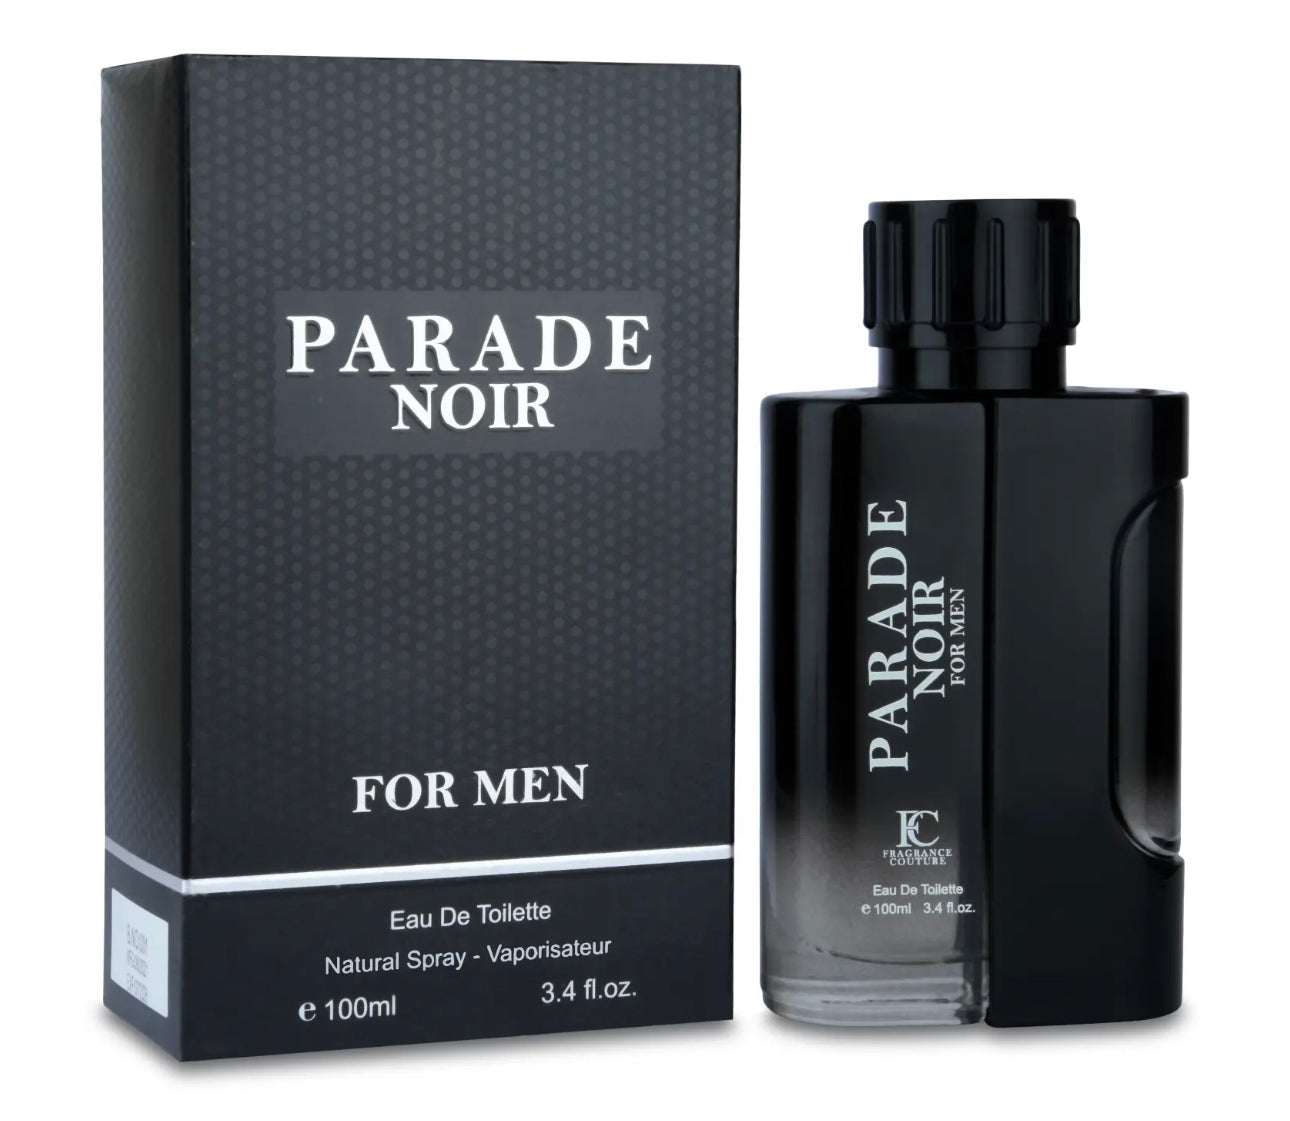 Parade Noir For Men